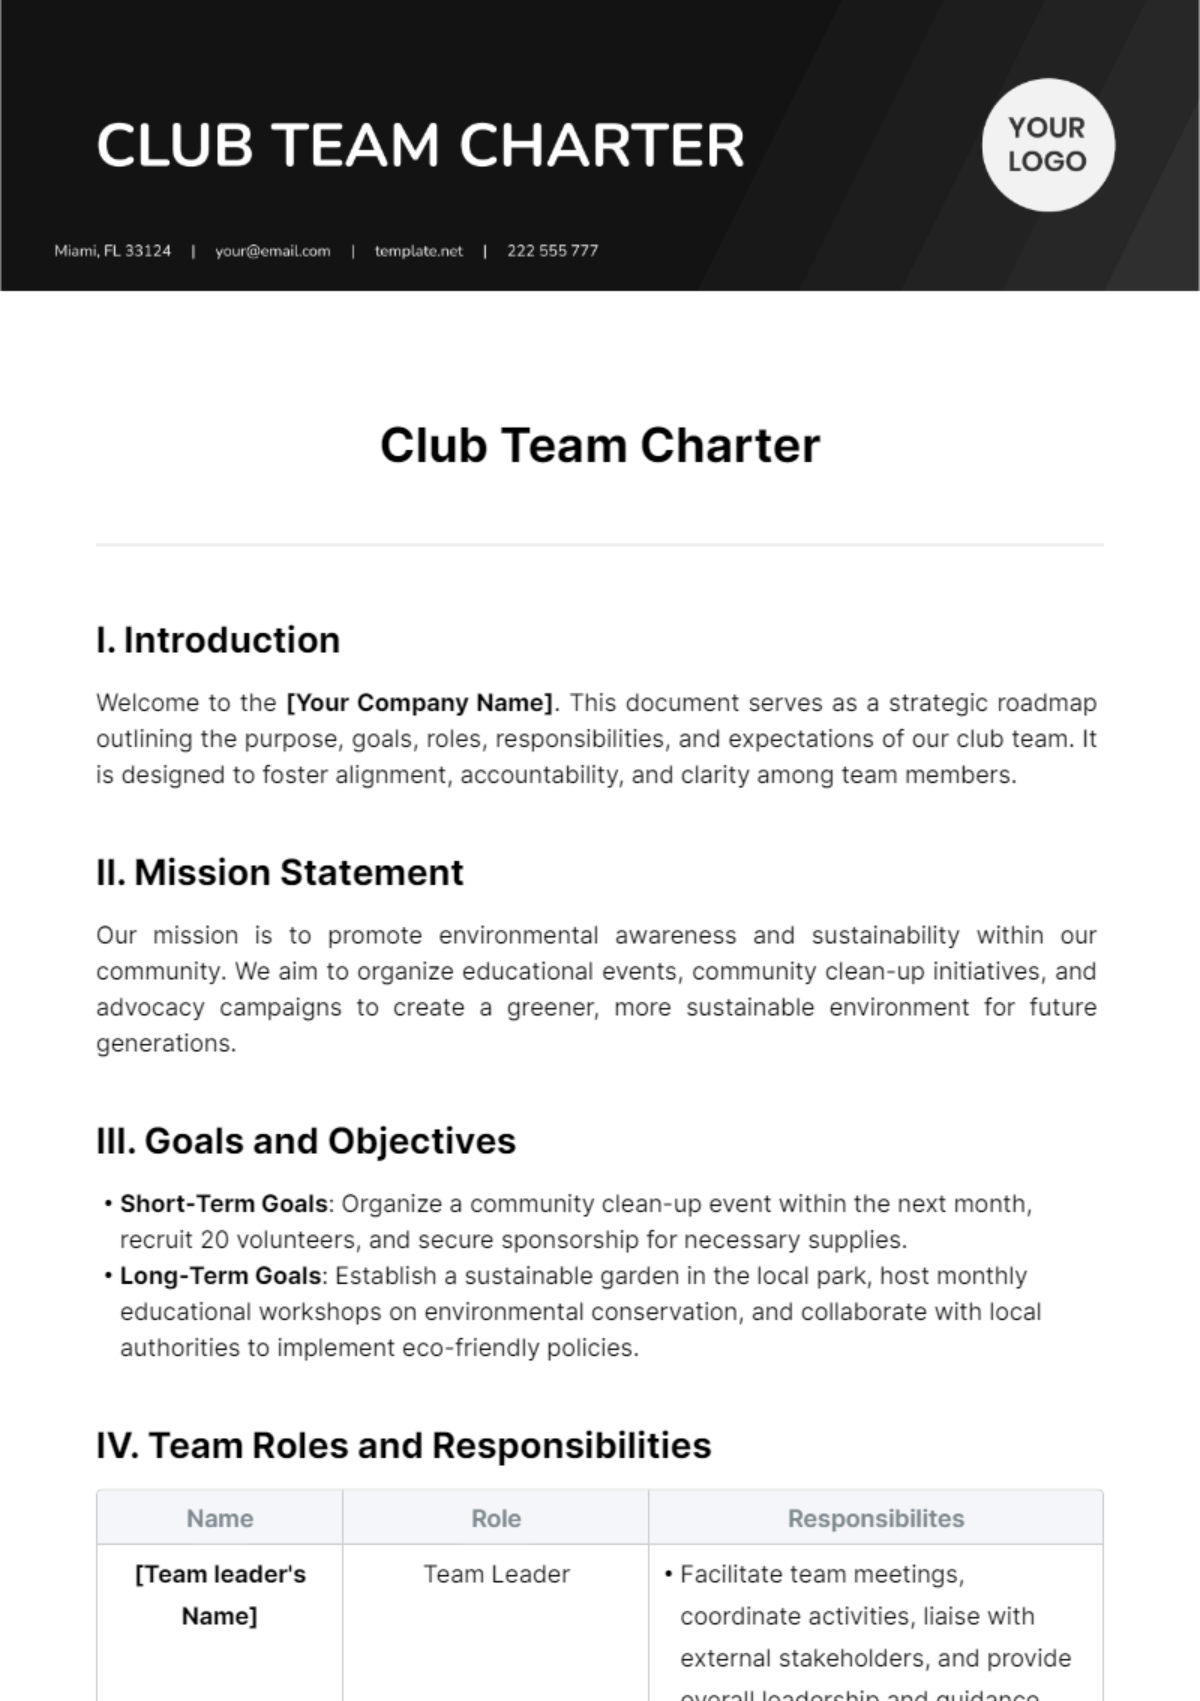 Club Team Charter Template